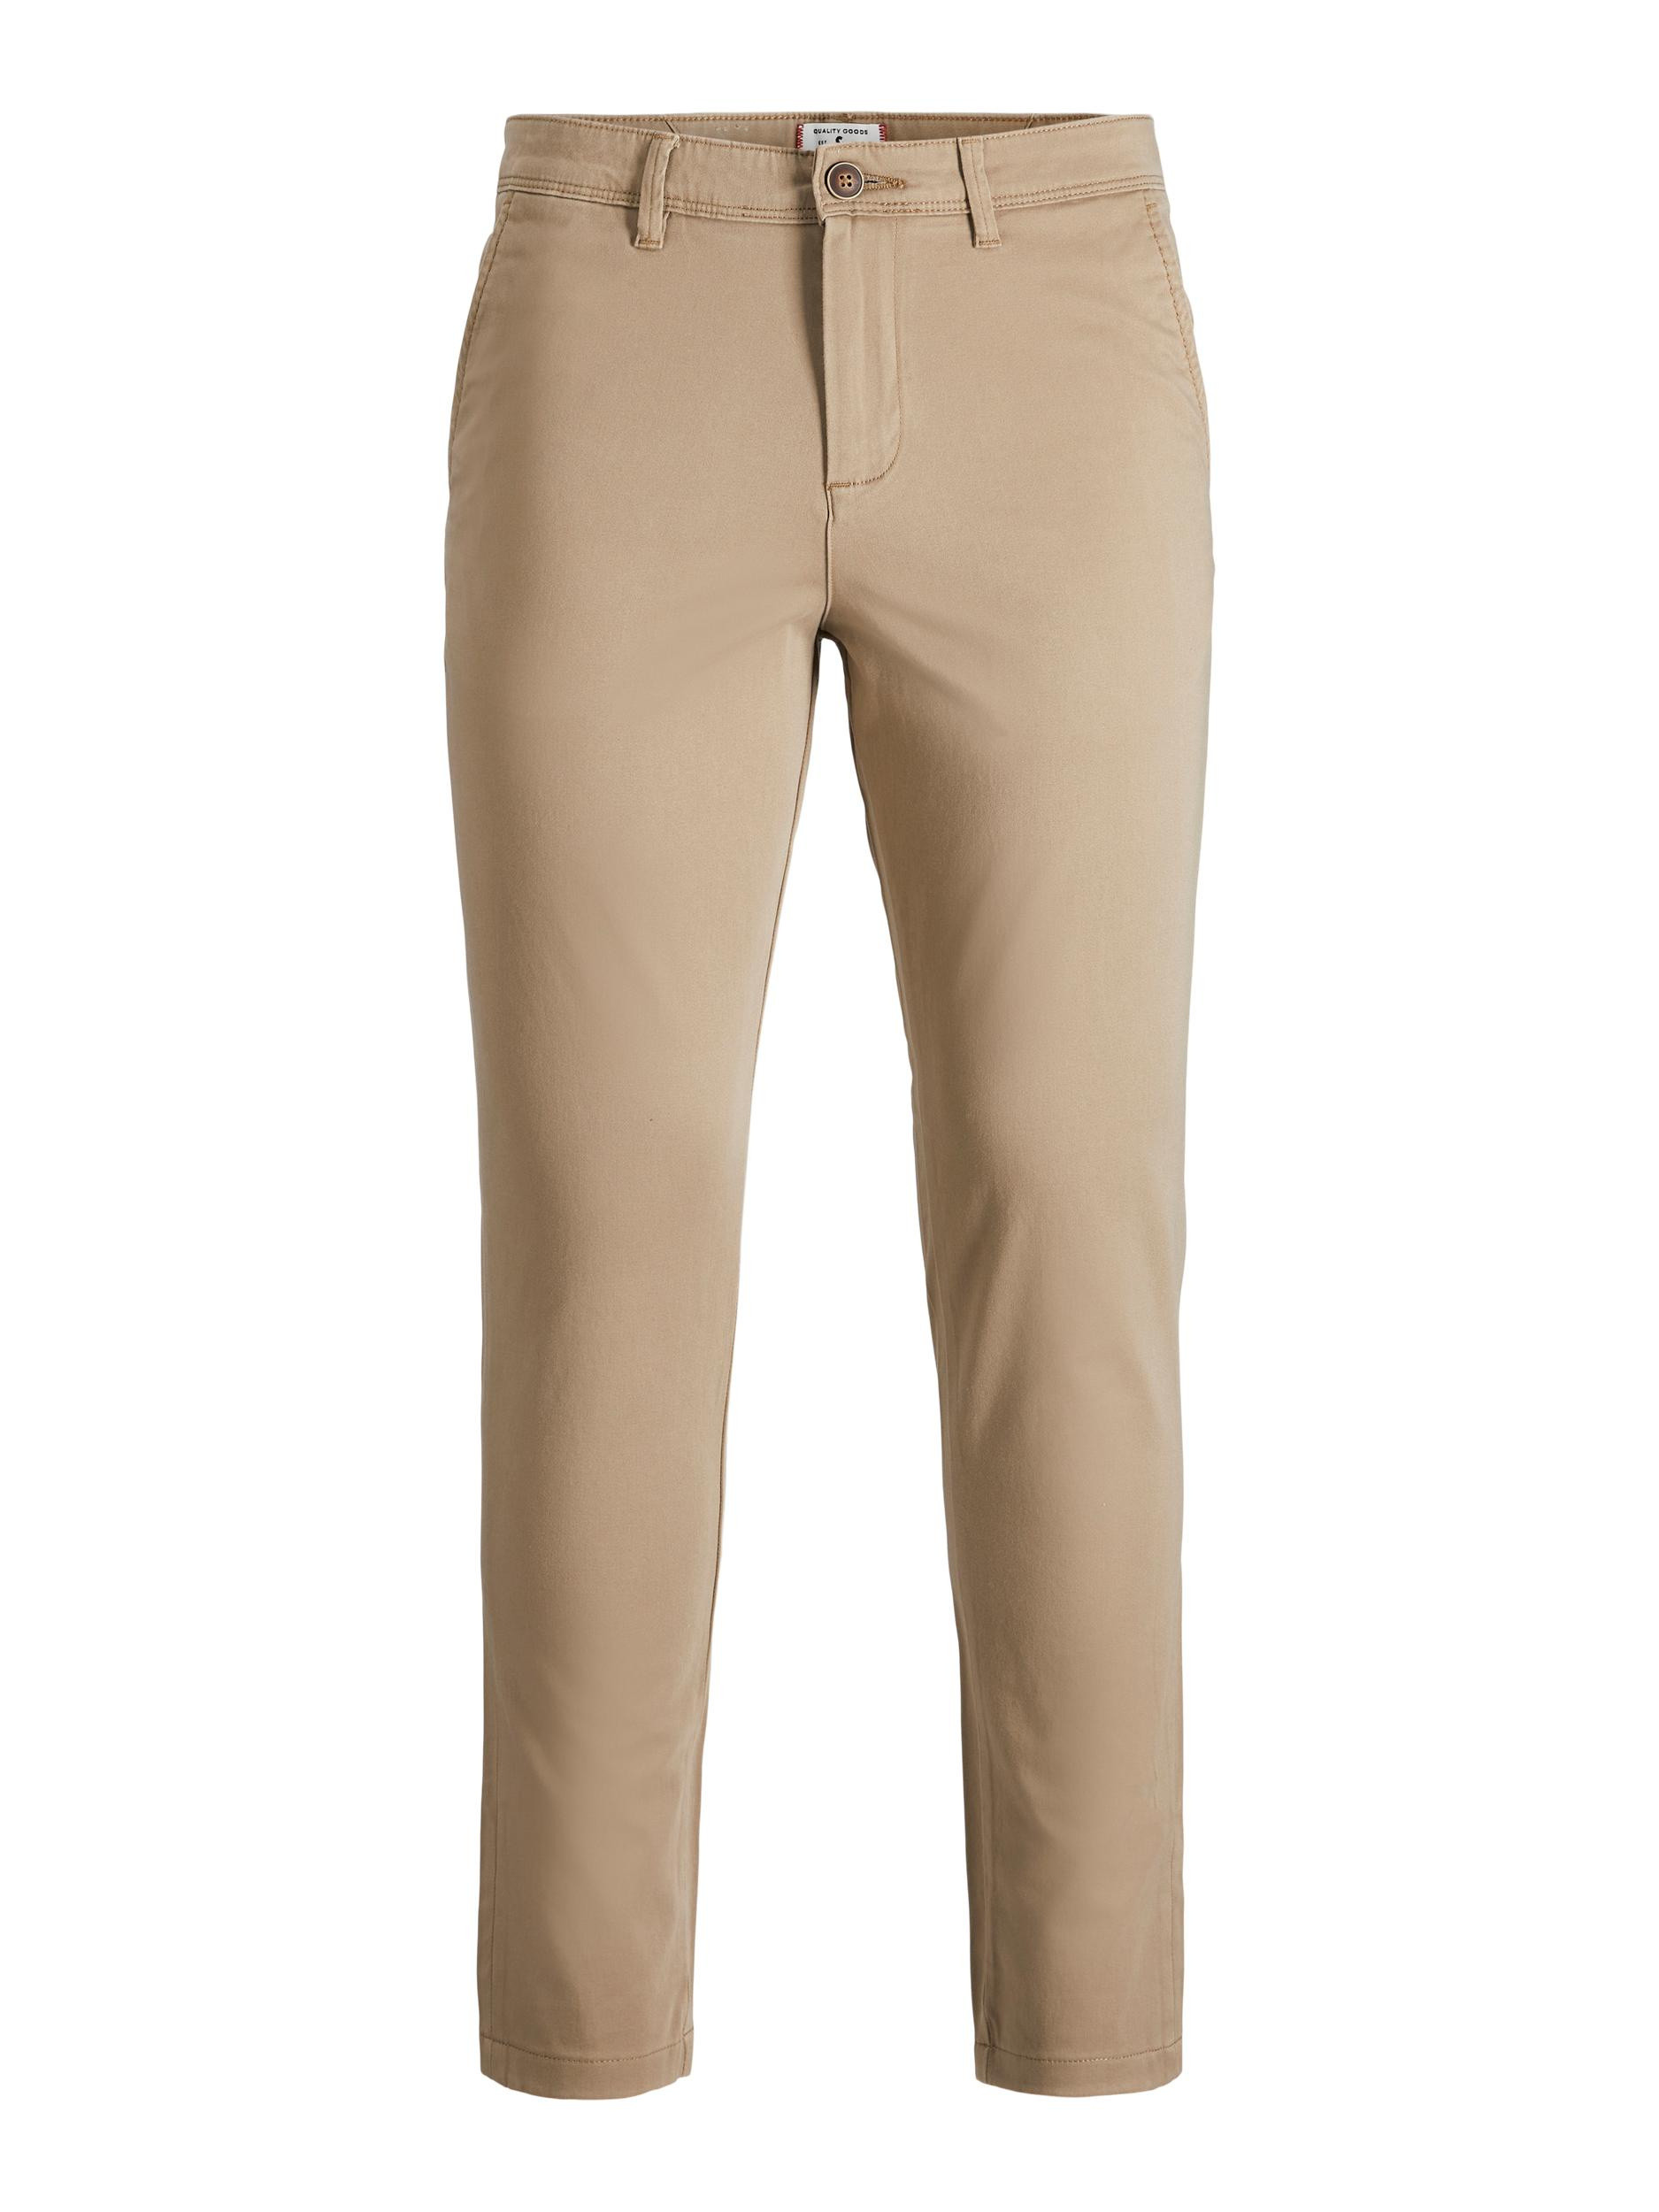 Pantaloni chino slim fit Marco, Beige, large image number 0